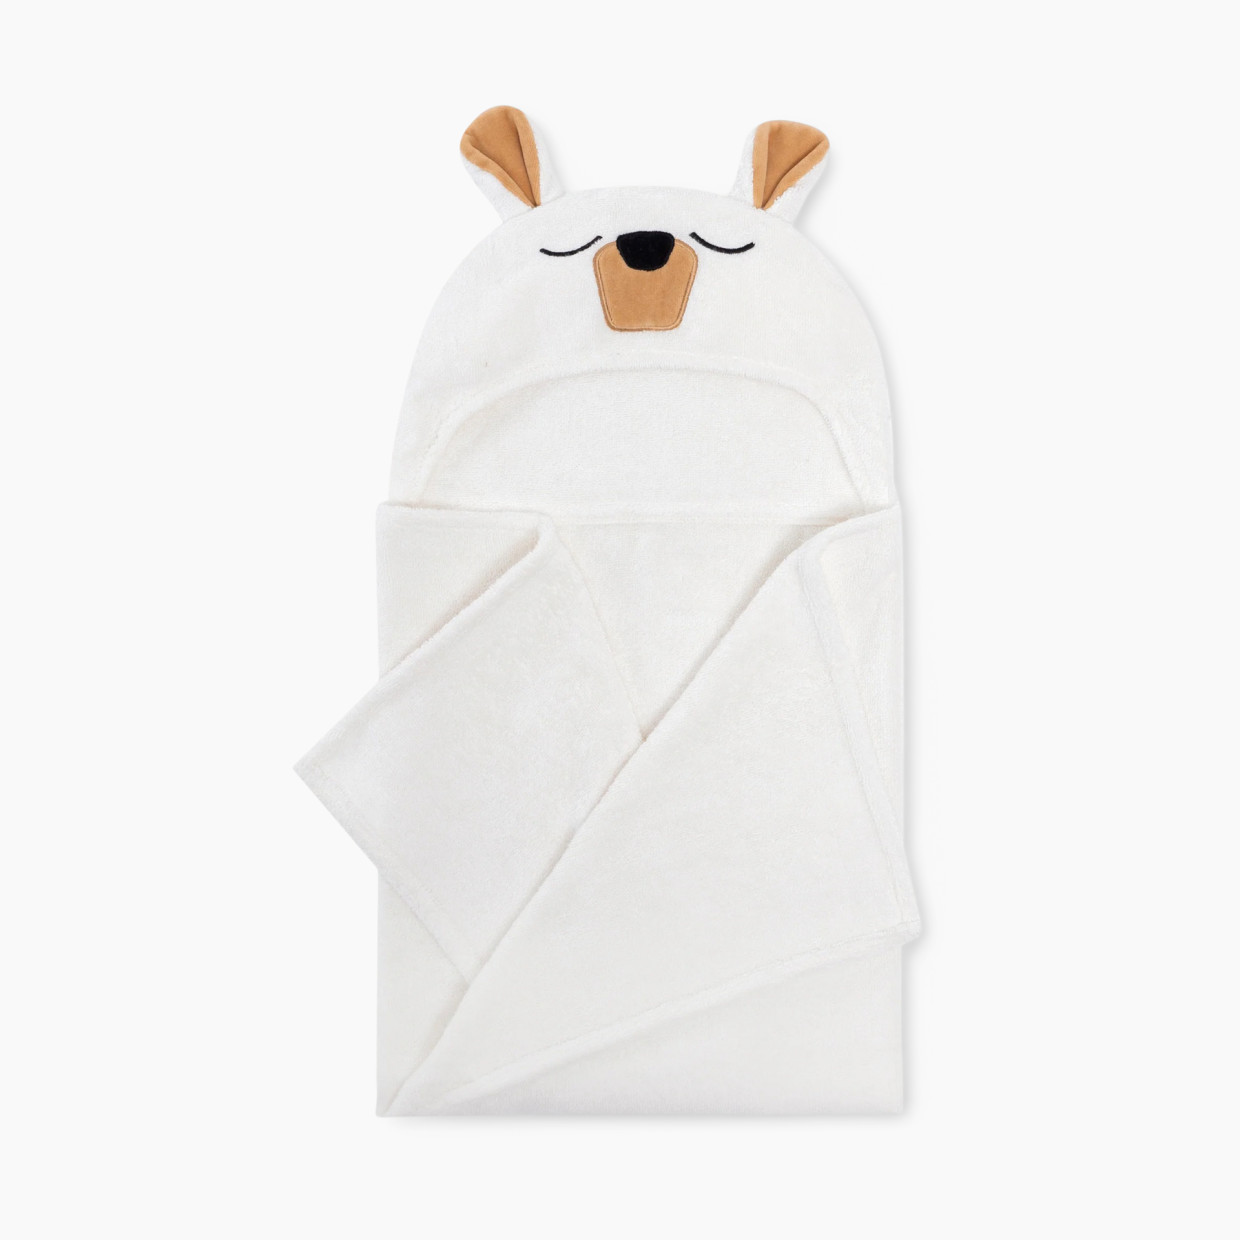 Natemia Animal Hooded Towel - Polar Bear.